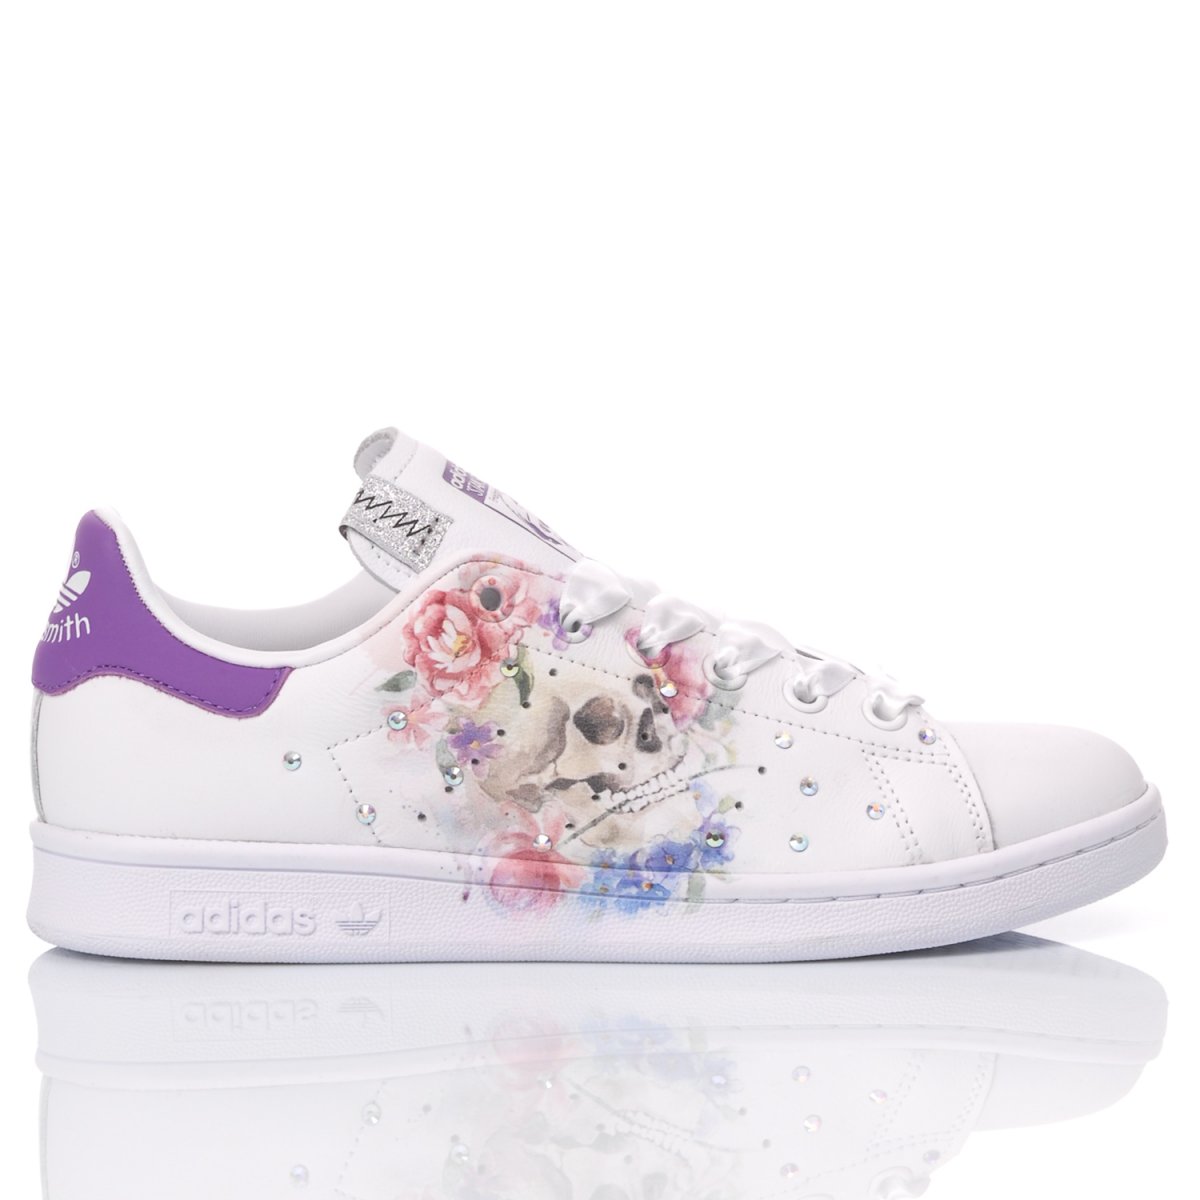 adidas stan smith with flowers